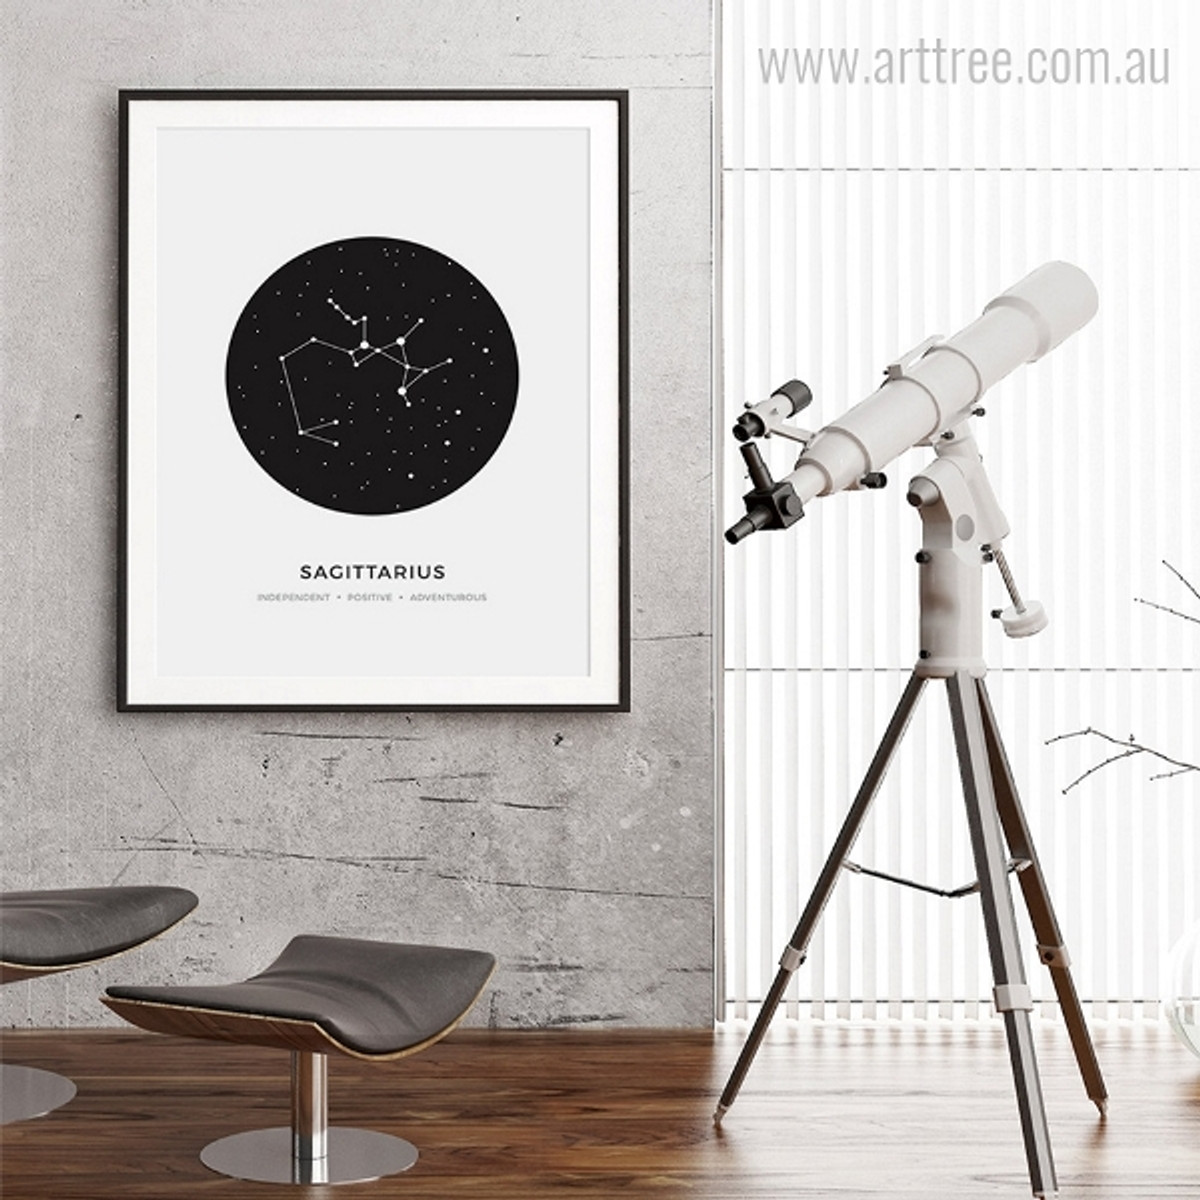 Sagittarius zodiacal Constellation Independent, Positive, Adventurous Print